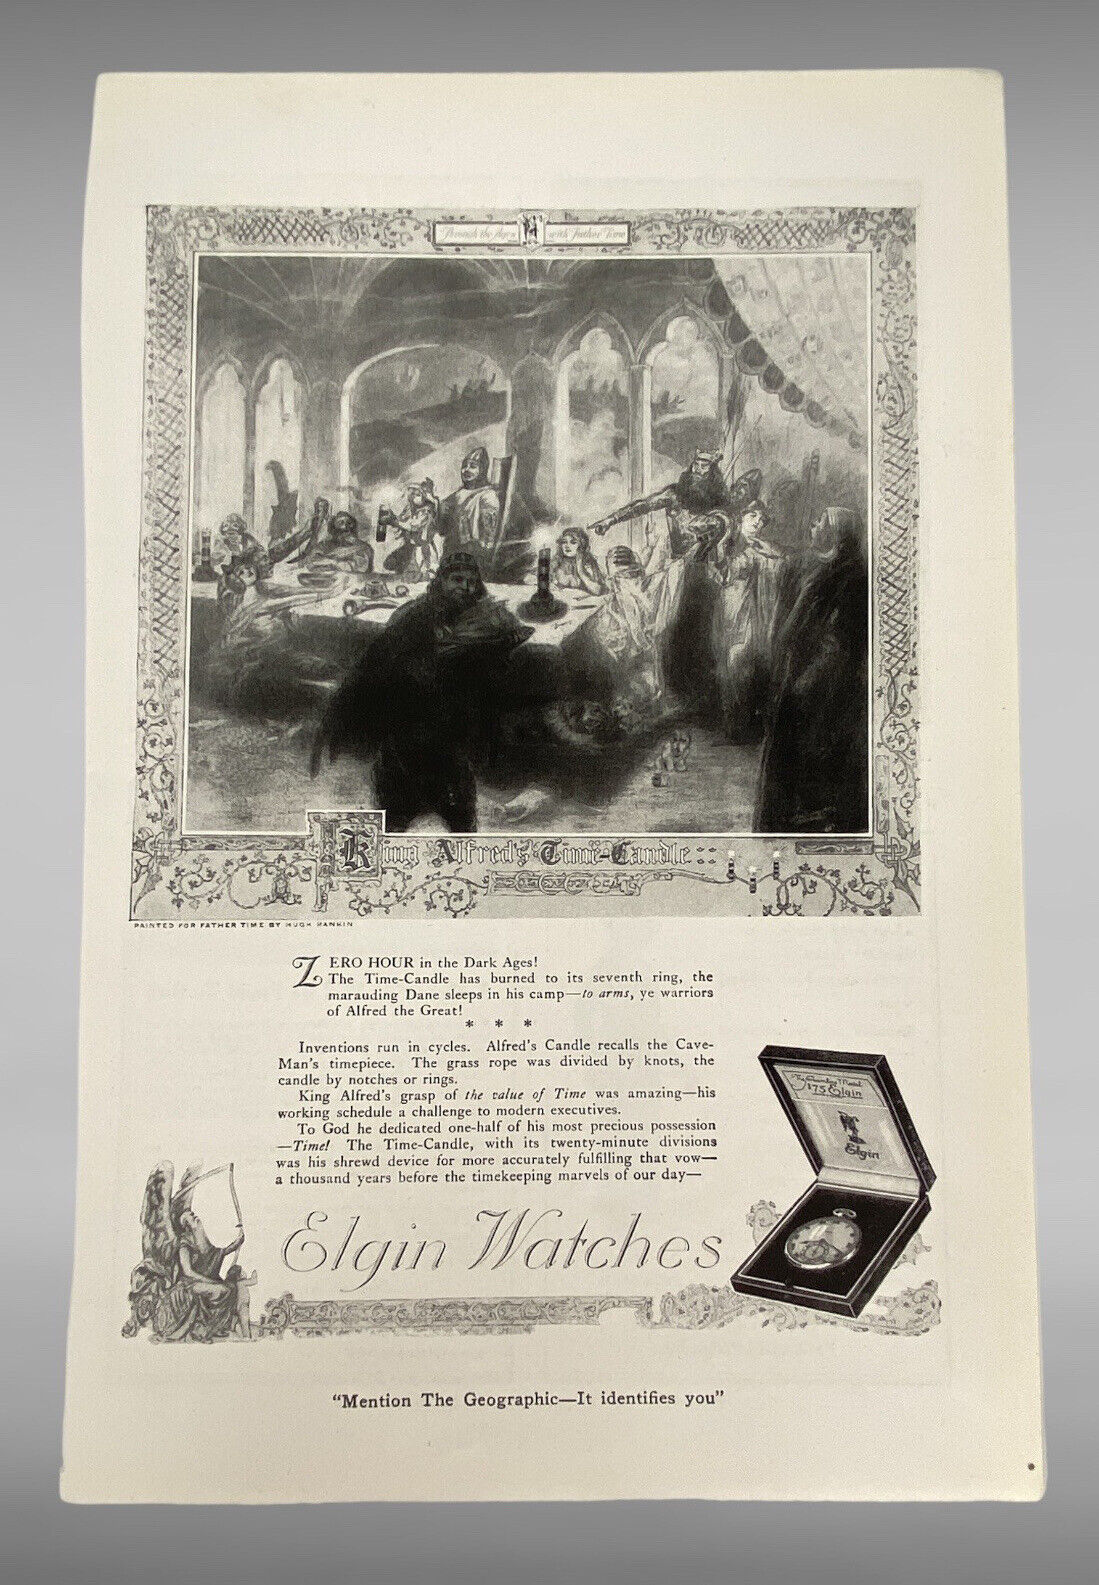 Vtg 1930's ELGIN Watches Print Advertisement Ephemera King Alfreds Time Candle